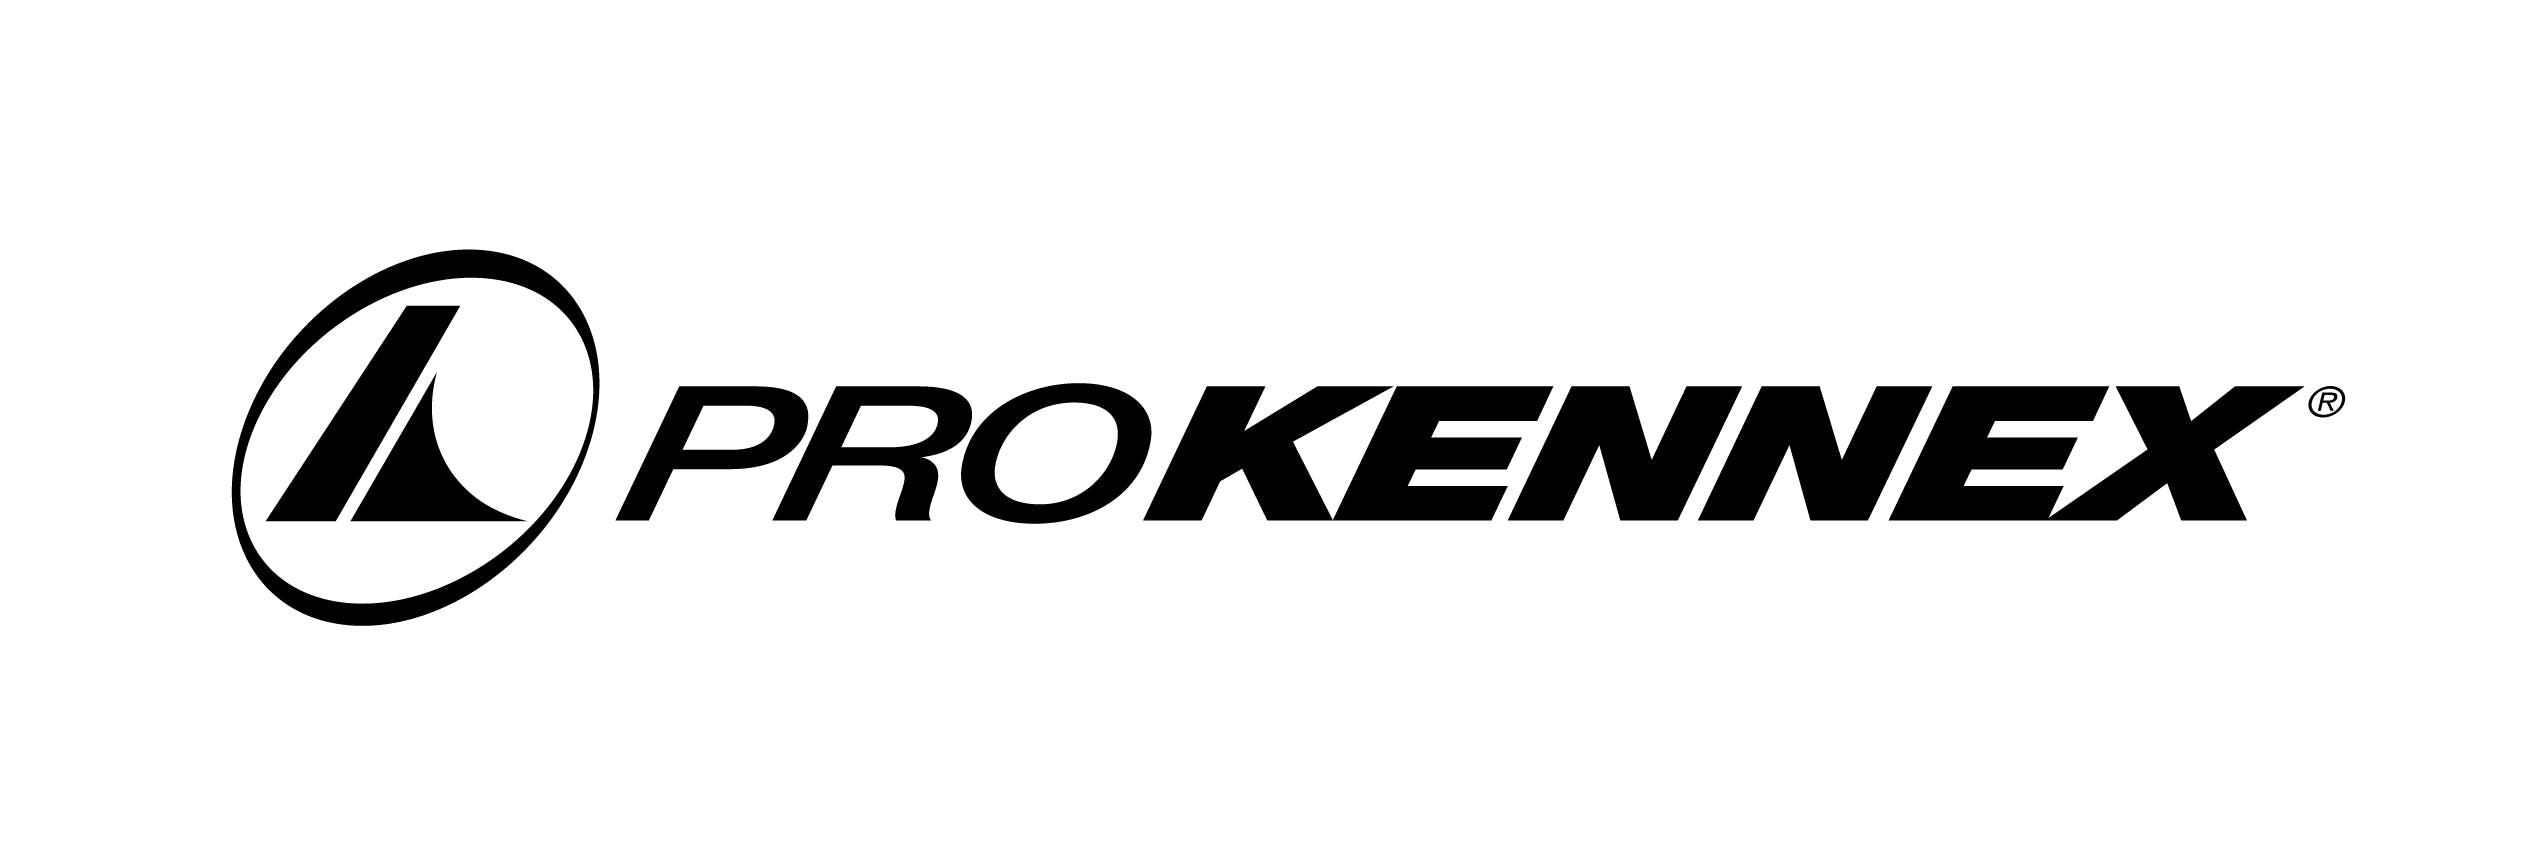 The ProKennex logo reads "ProKennex" in black. 